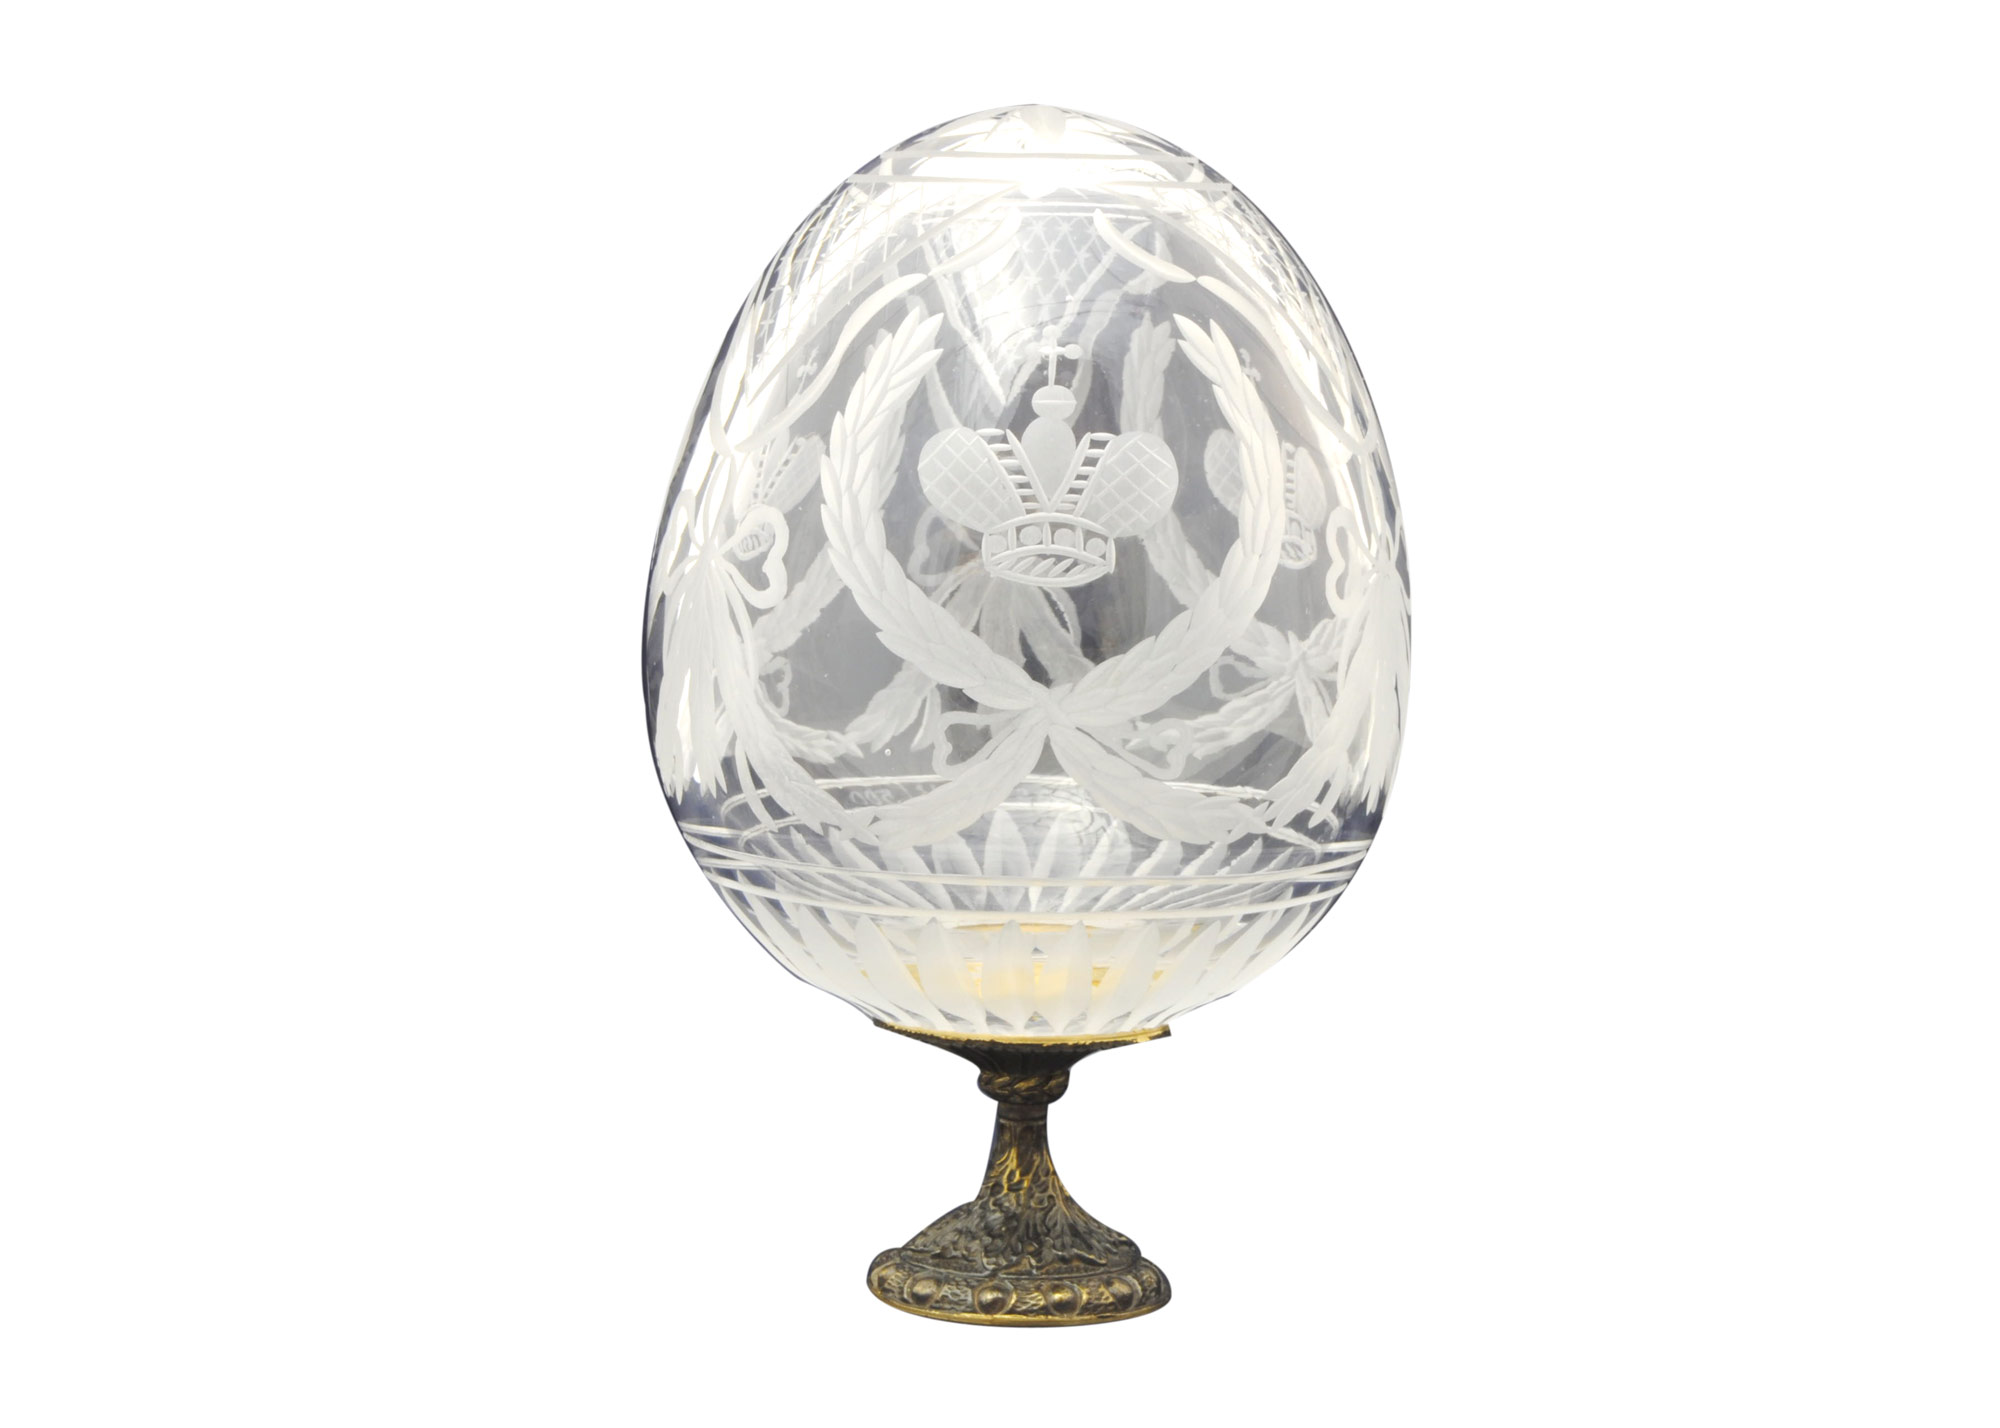 Buy Crown Faberge Egg clear at GoldenCockerel.com